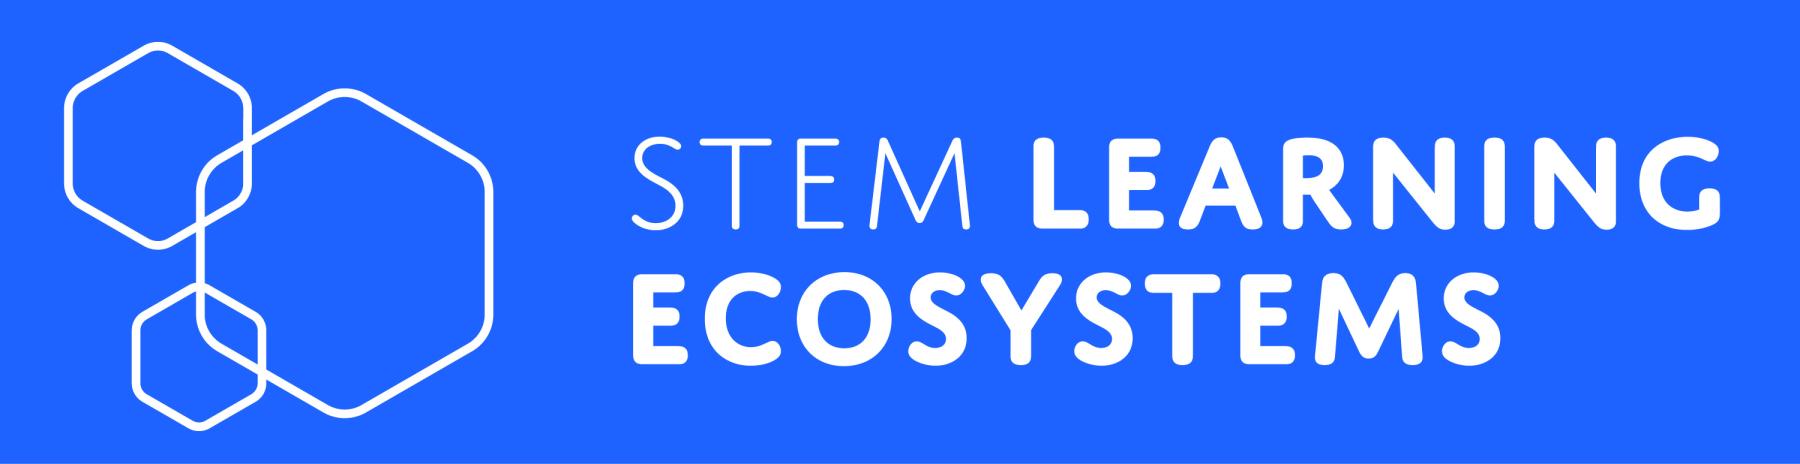 STEM Learning ecosystems horizontal logo white text on blue